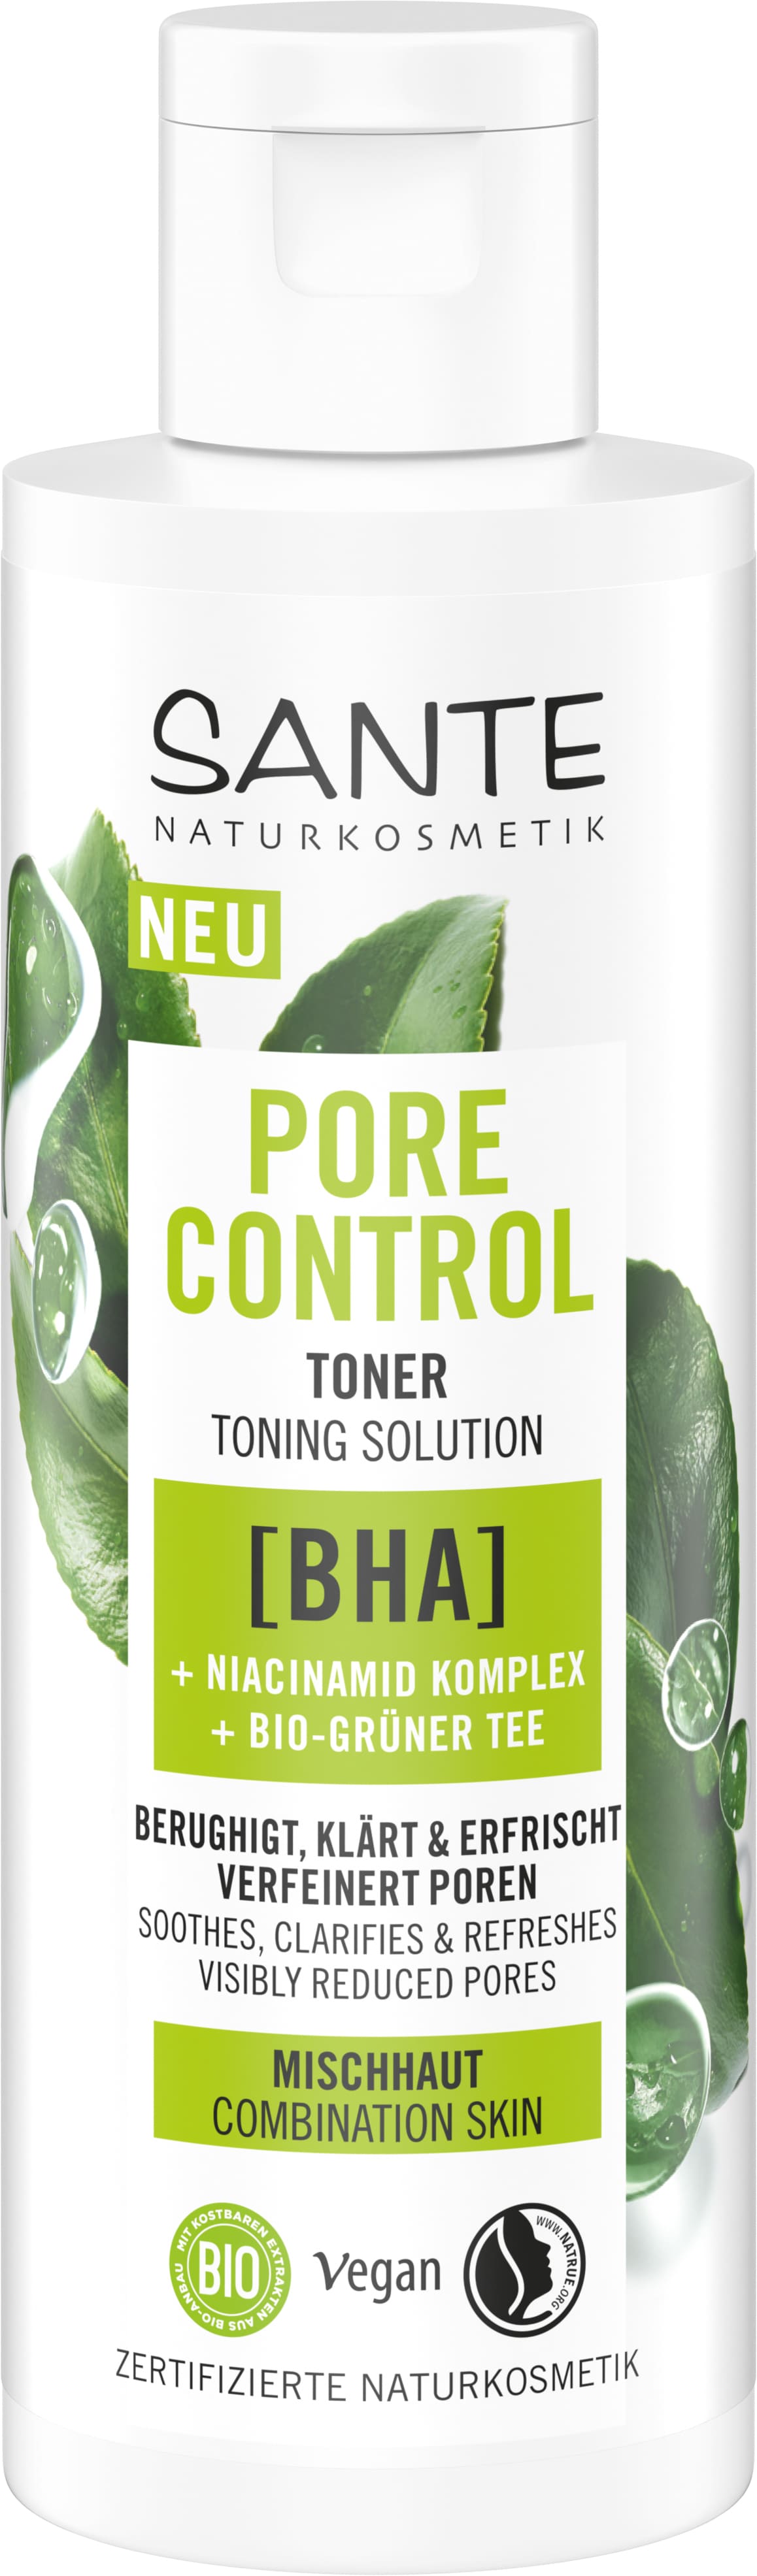 Pore Control Toner BHA, SANTE mit Komplex Niacinamid Naturkosmetik Tee | Bio-Grüner 